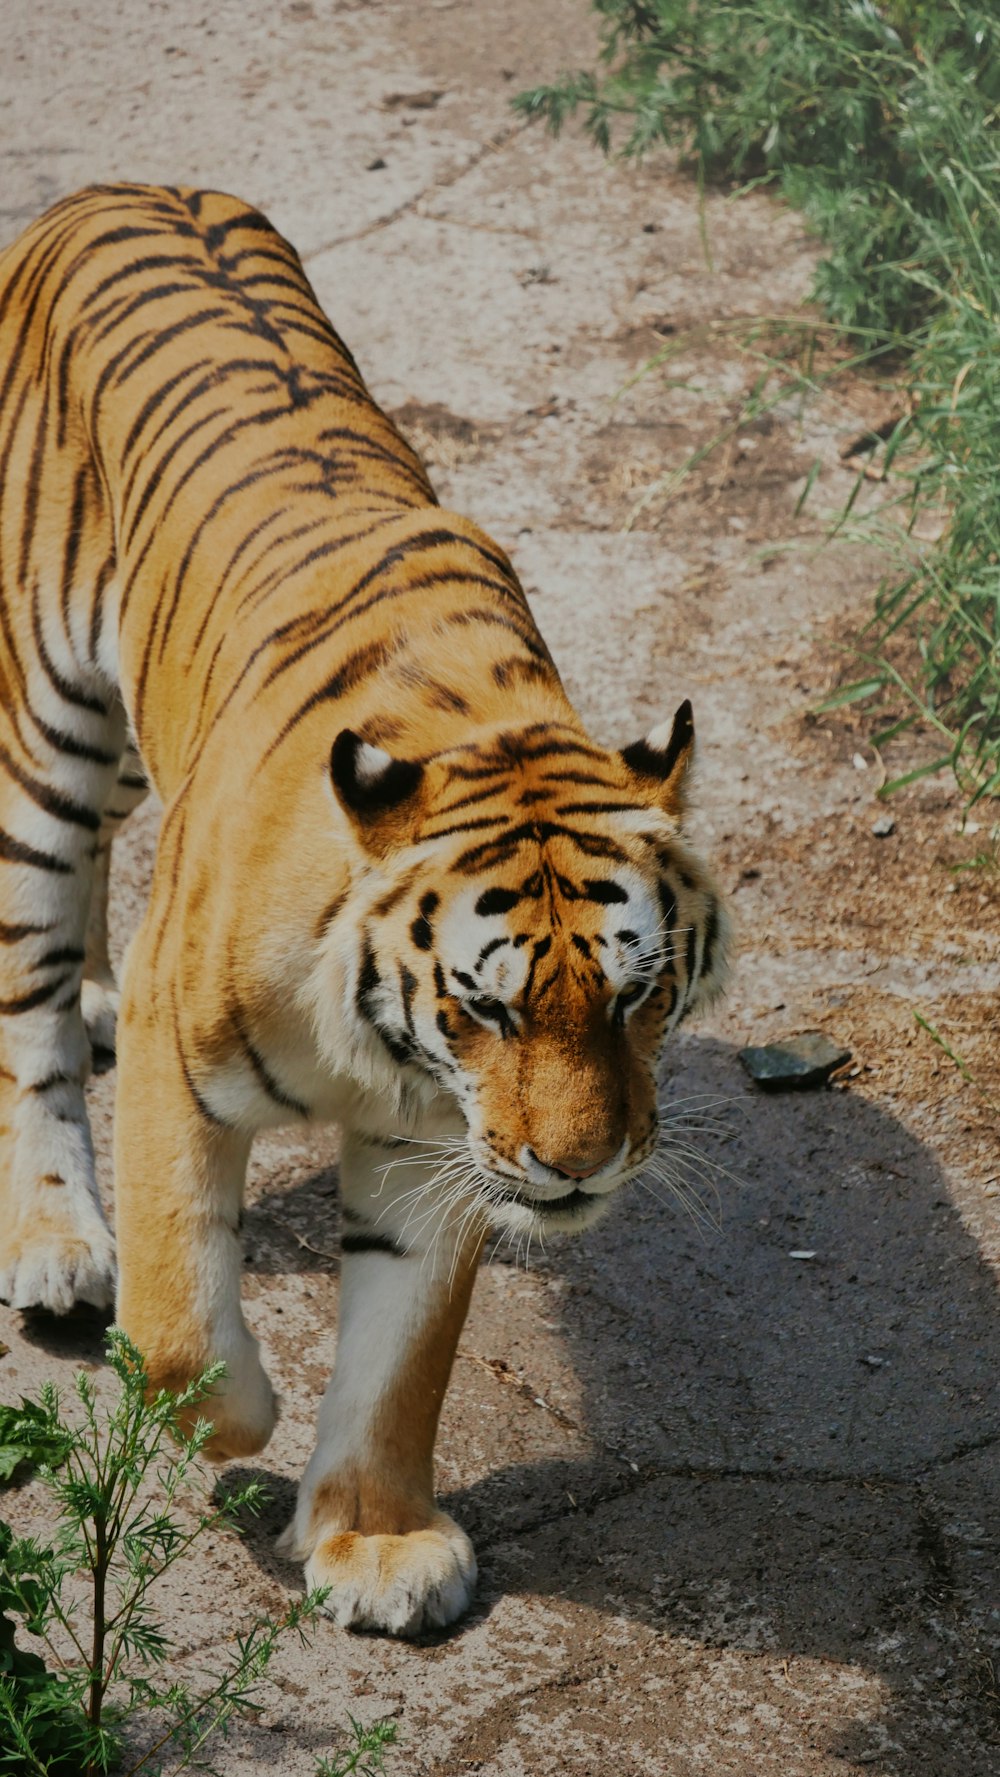 a tiger walking on a dirt path